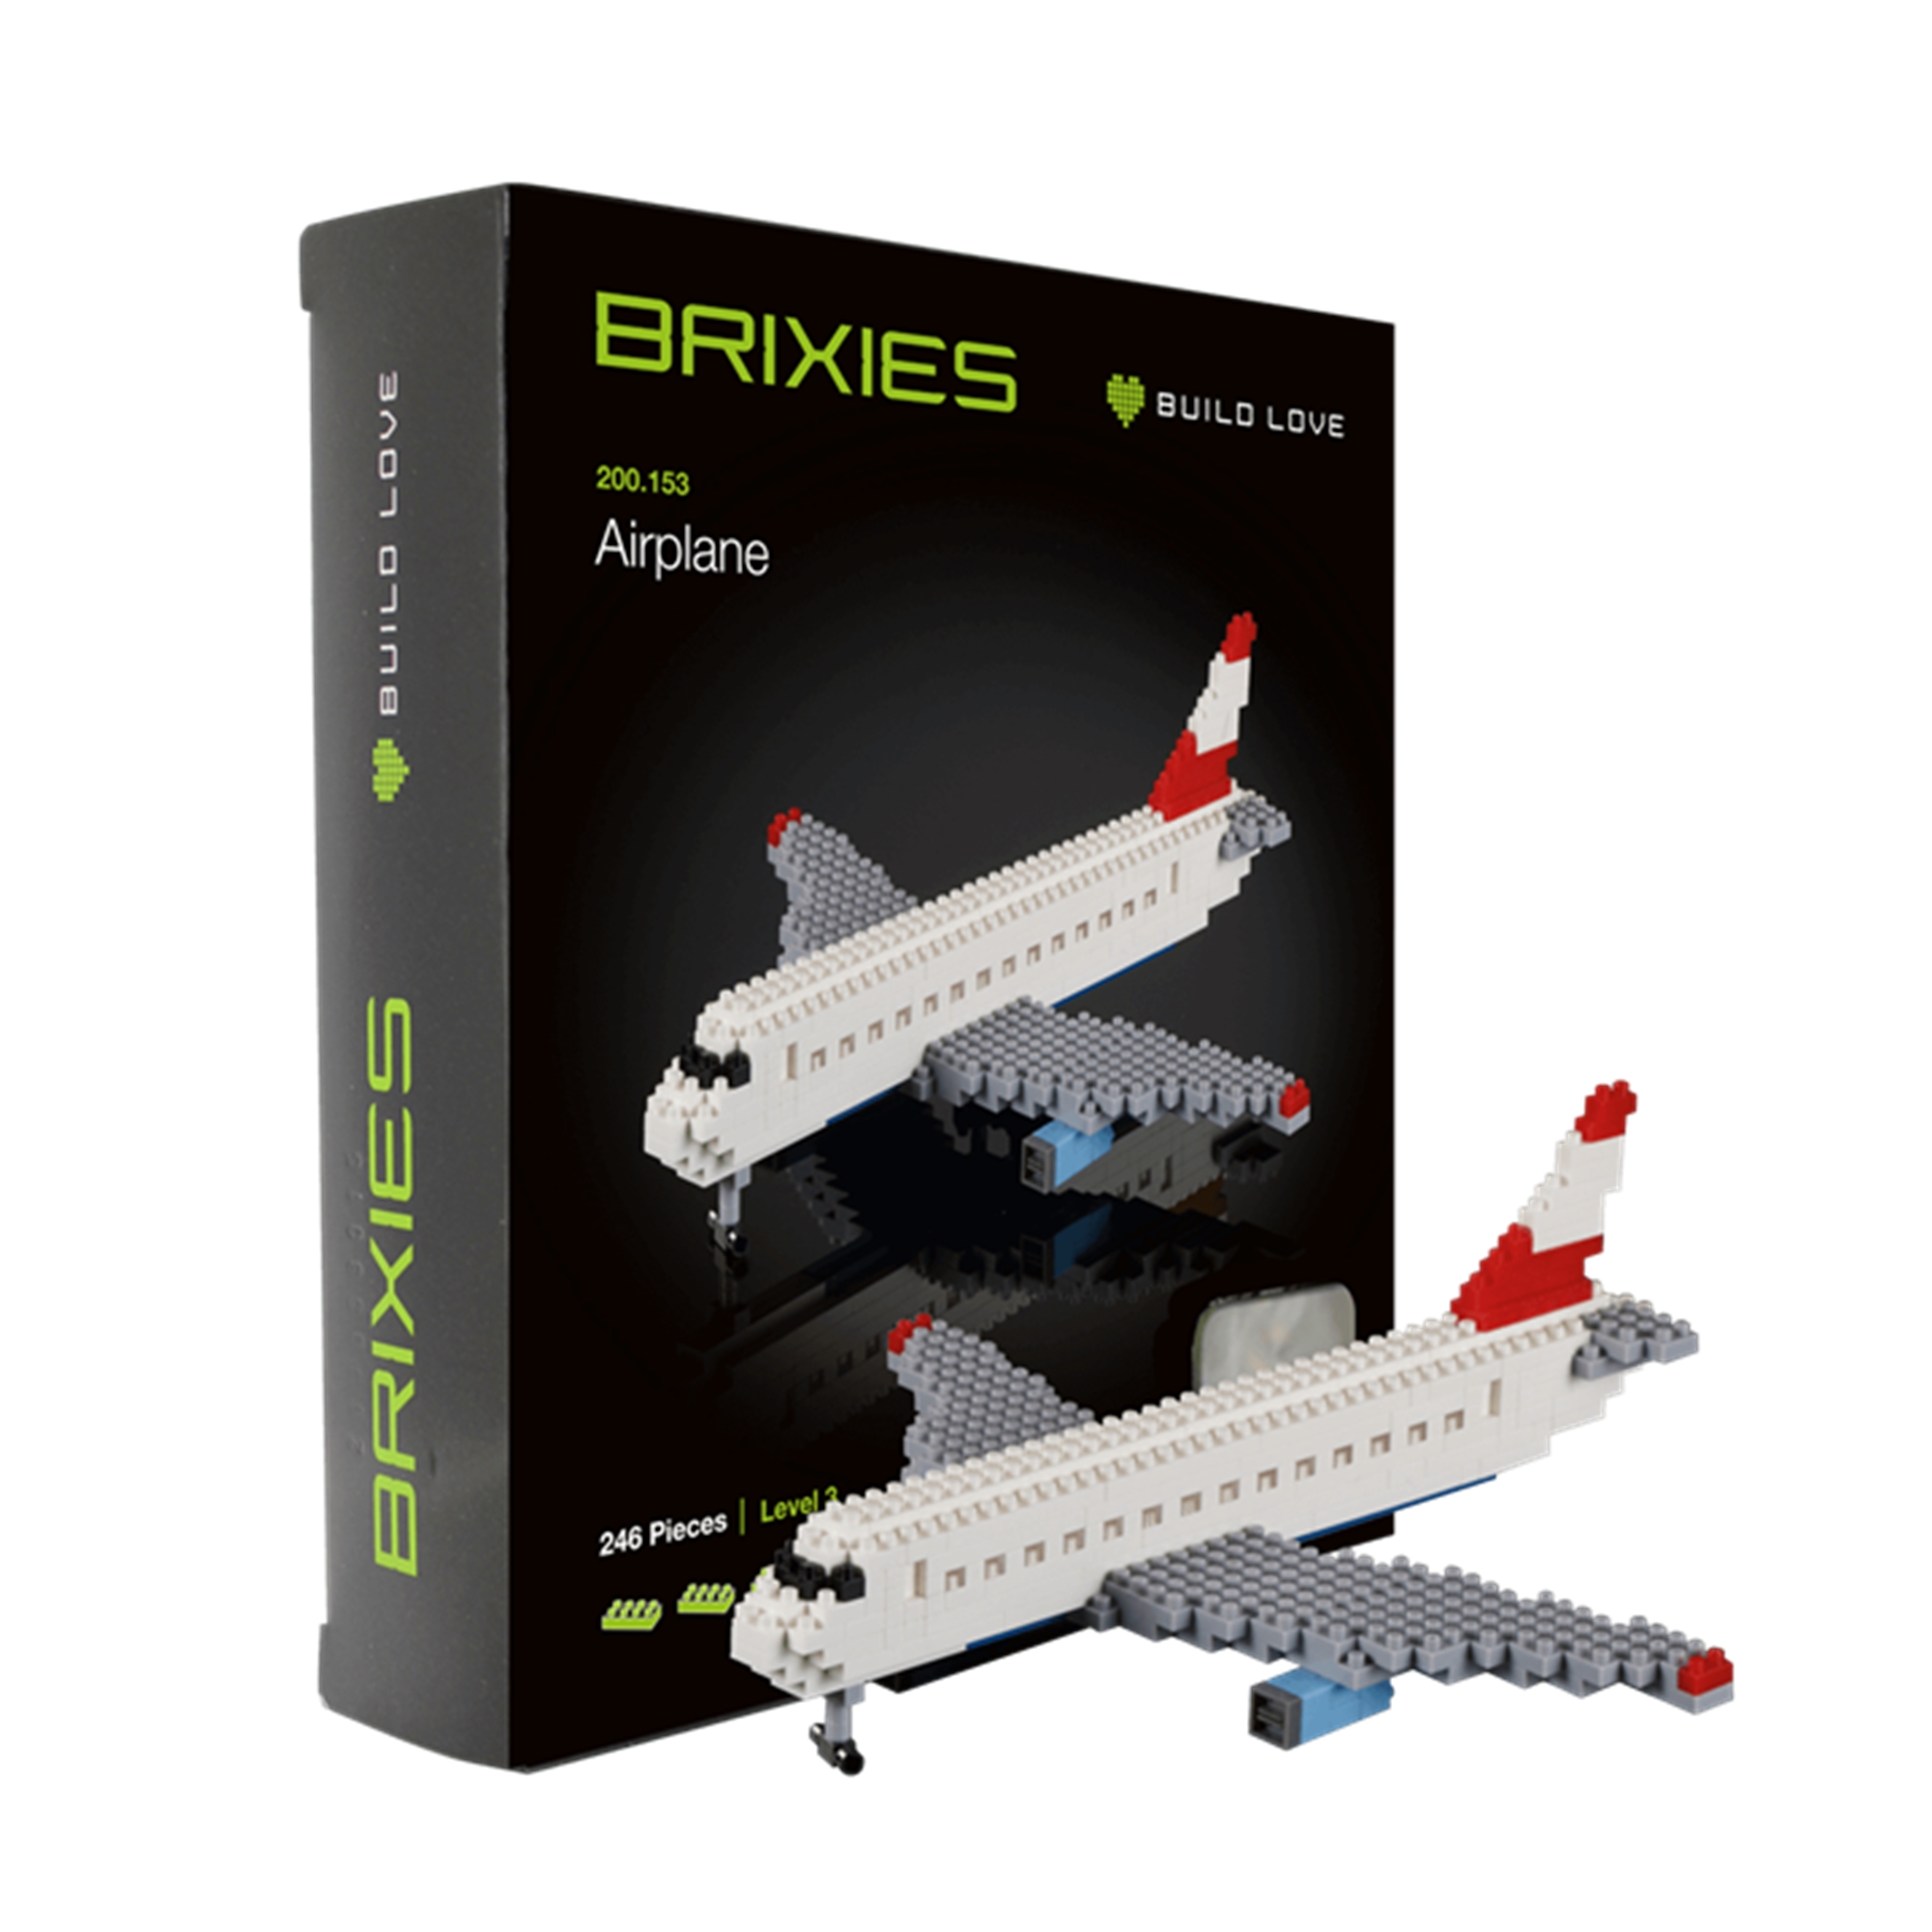 Flugzeug - mini Bausteine Airplane - Airplane - Bausatz aus Brixies mini Bausteinen (Bauklötzen)